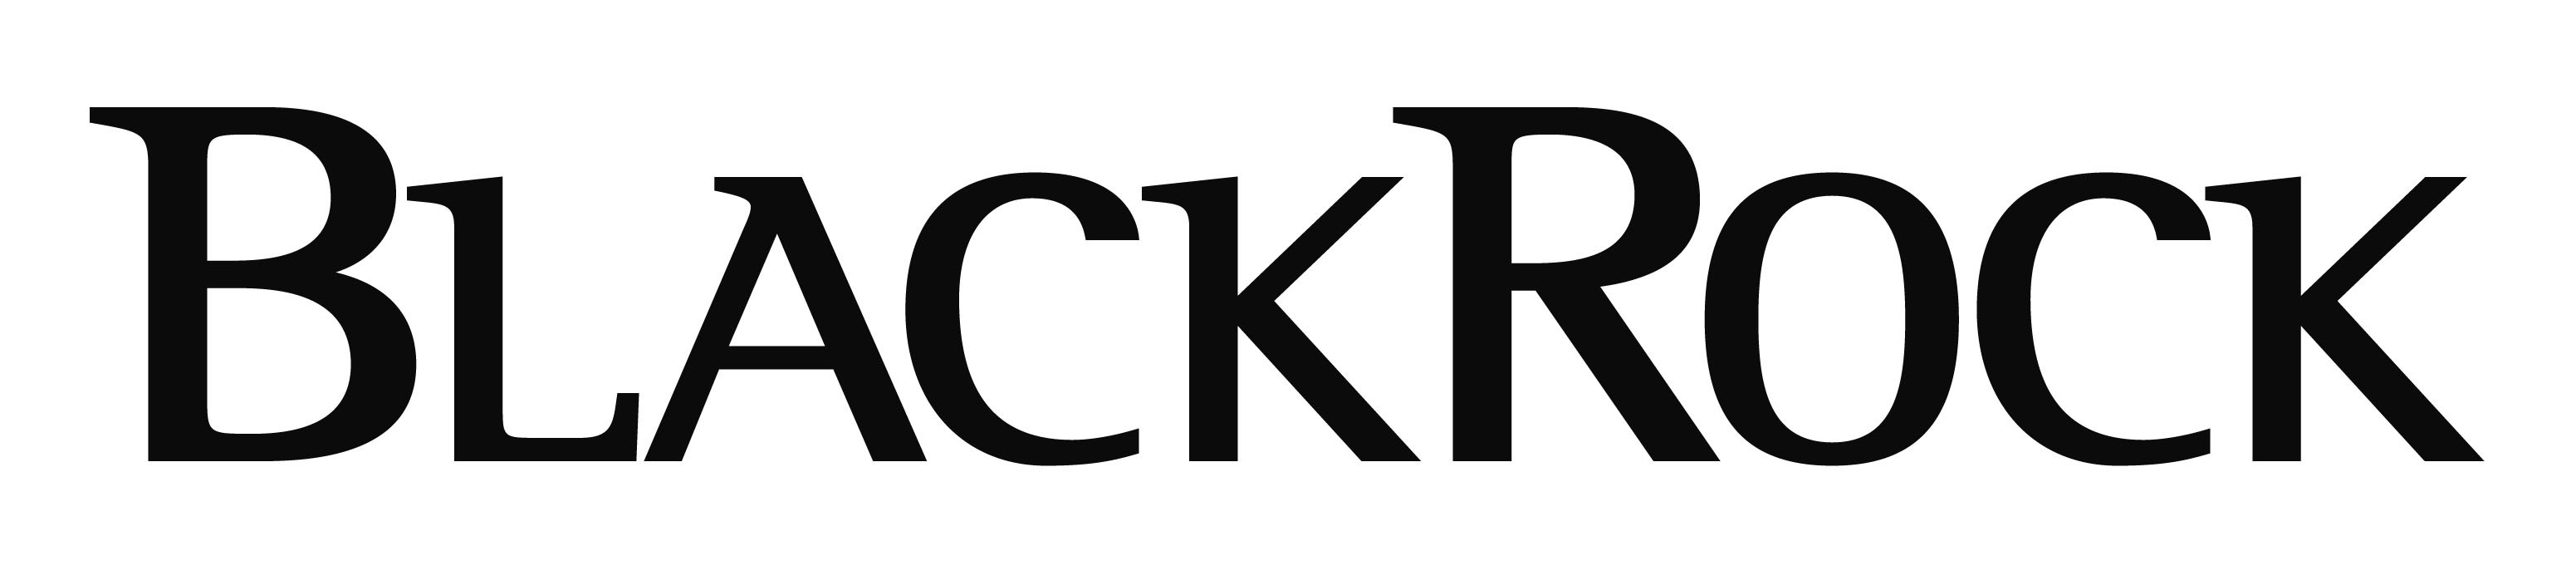 Blackrock Latin American Investment Trust Plc